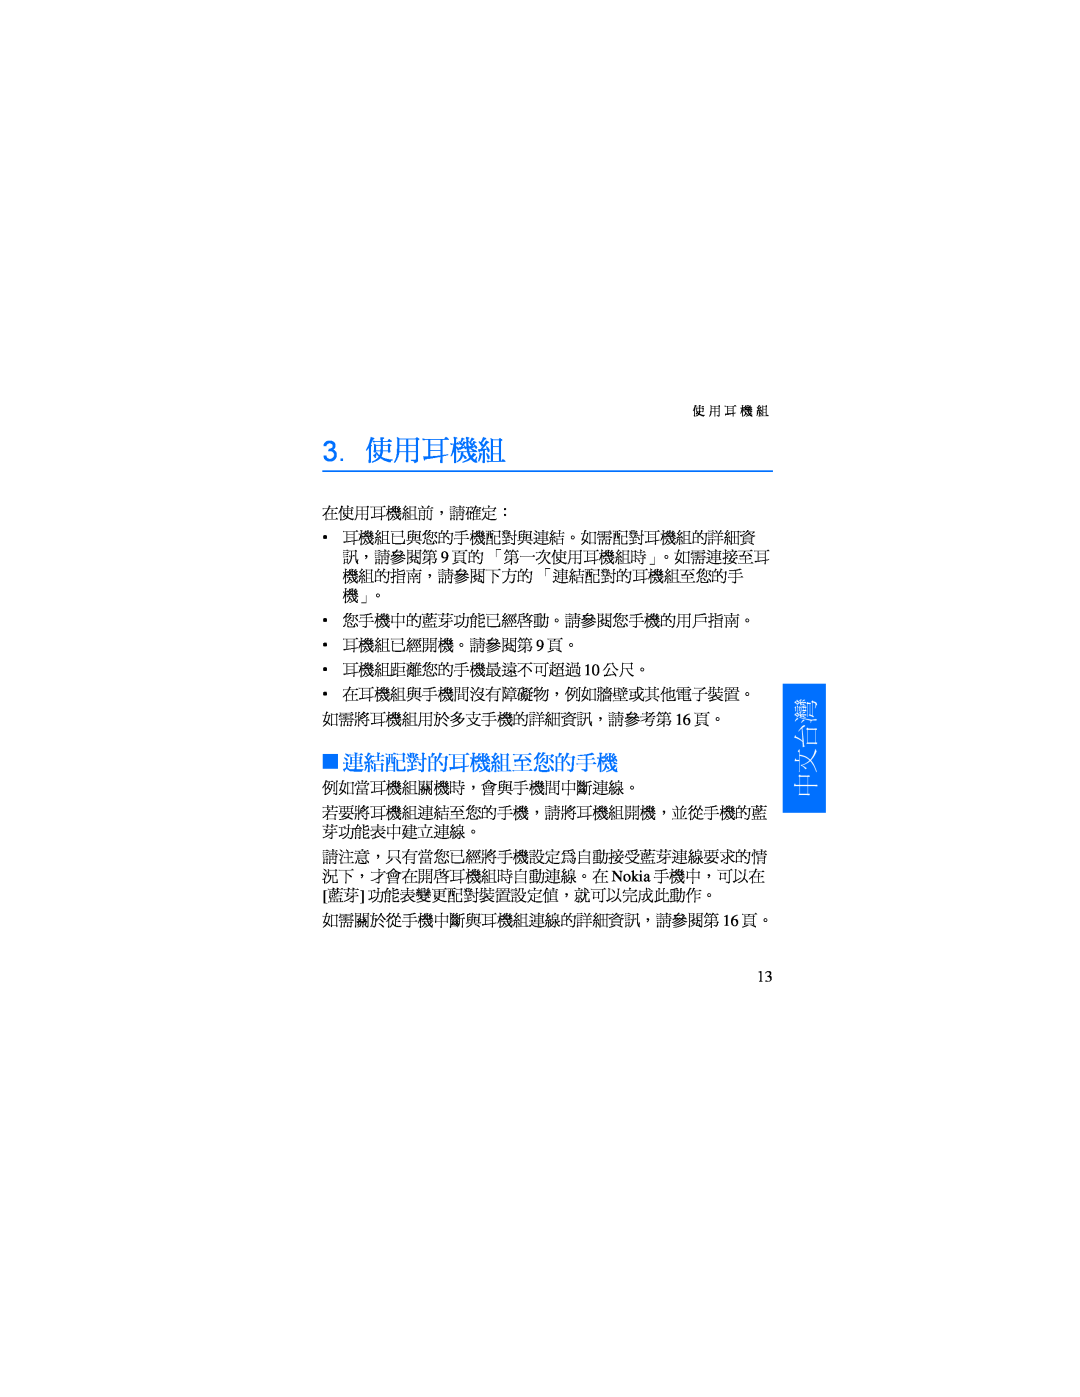 Nokia HDW-3 manual 3.使用耳機組, 連結配對的耳機組至您的手機, 中文台灣 